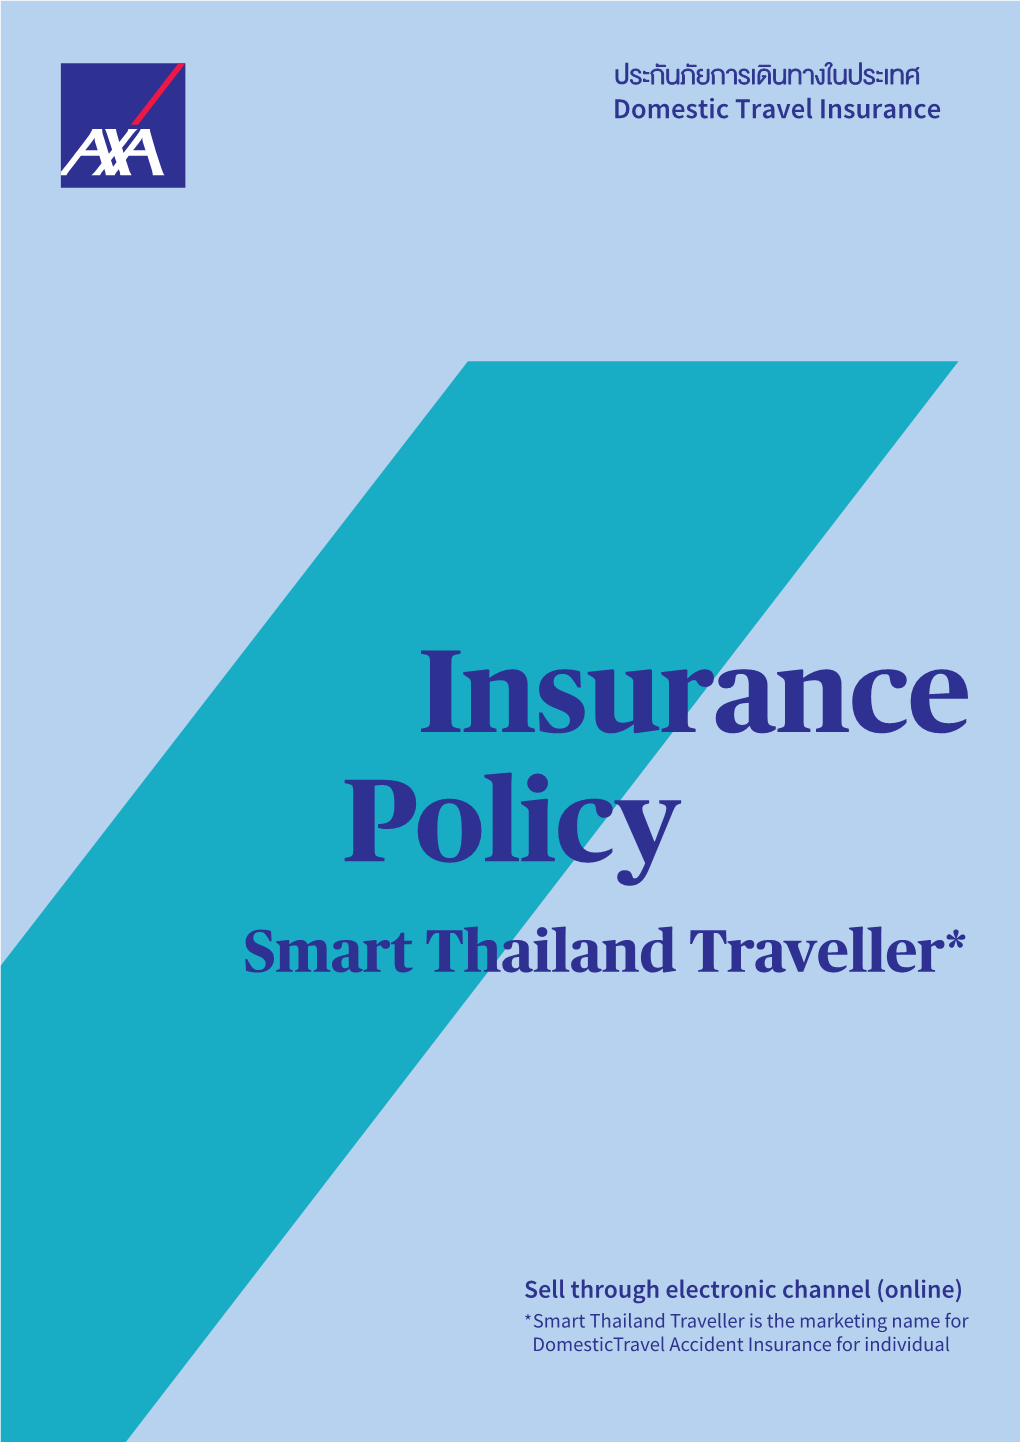 Smart Thailand Traveller*